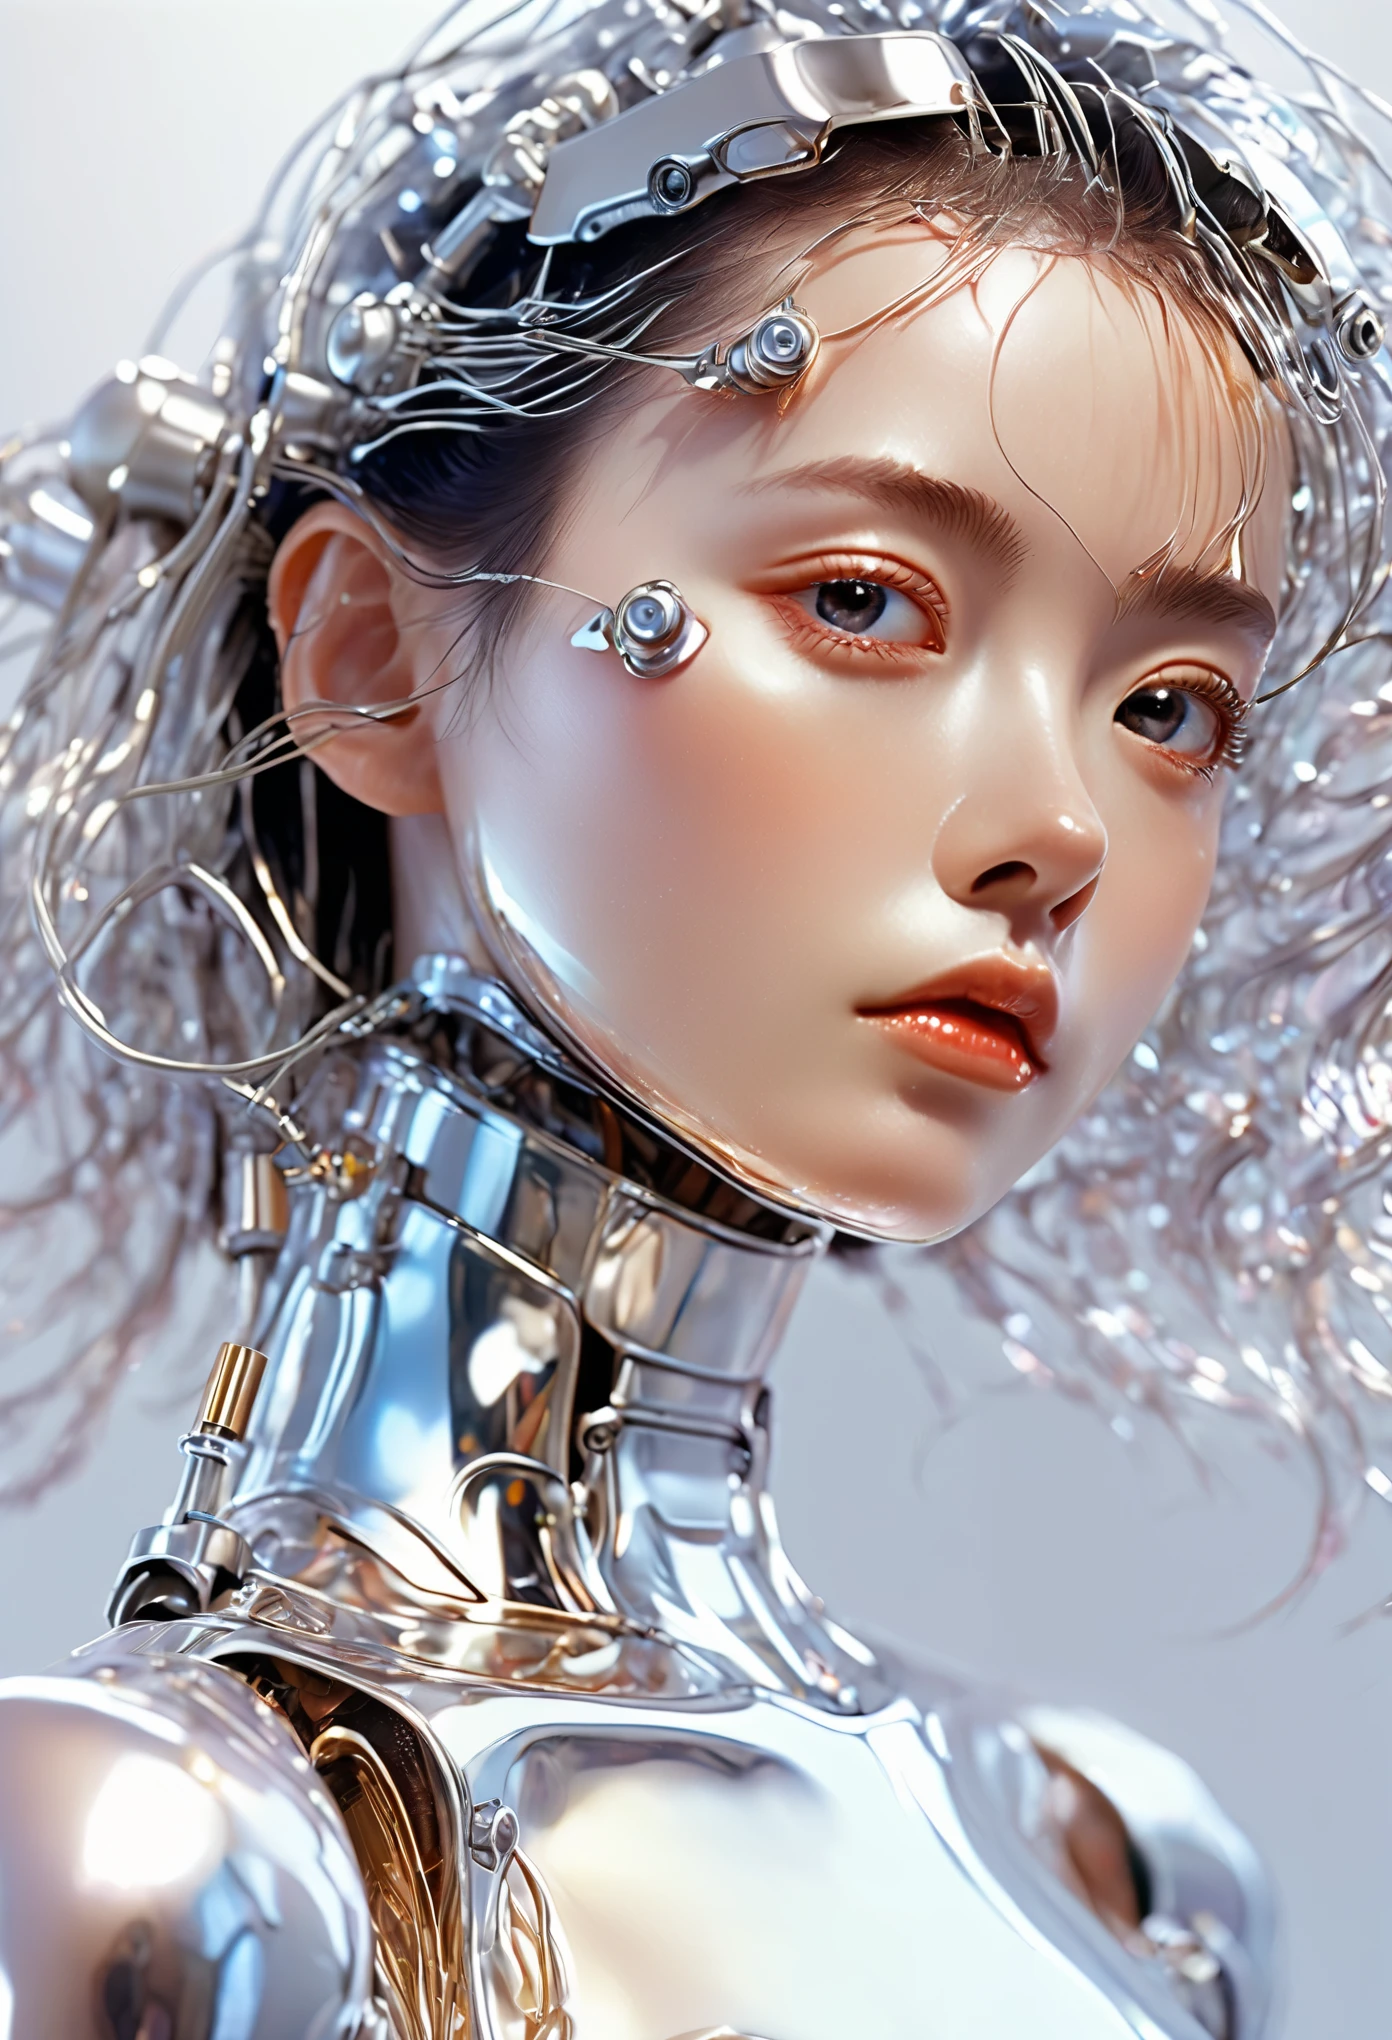 hajime sorayama, 90년대, 실혐실, 패션 여자, 그녀의 로봇 소녀의 초상화 , 주근깨,HD 얼굴 특징, f4, 35mm, 사진술, 자연광 , 밝은，젤리 질감，피부가 정말 맑아요